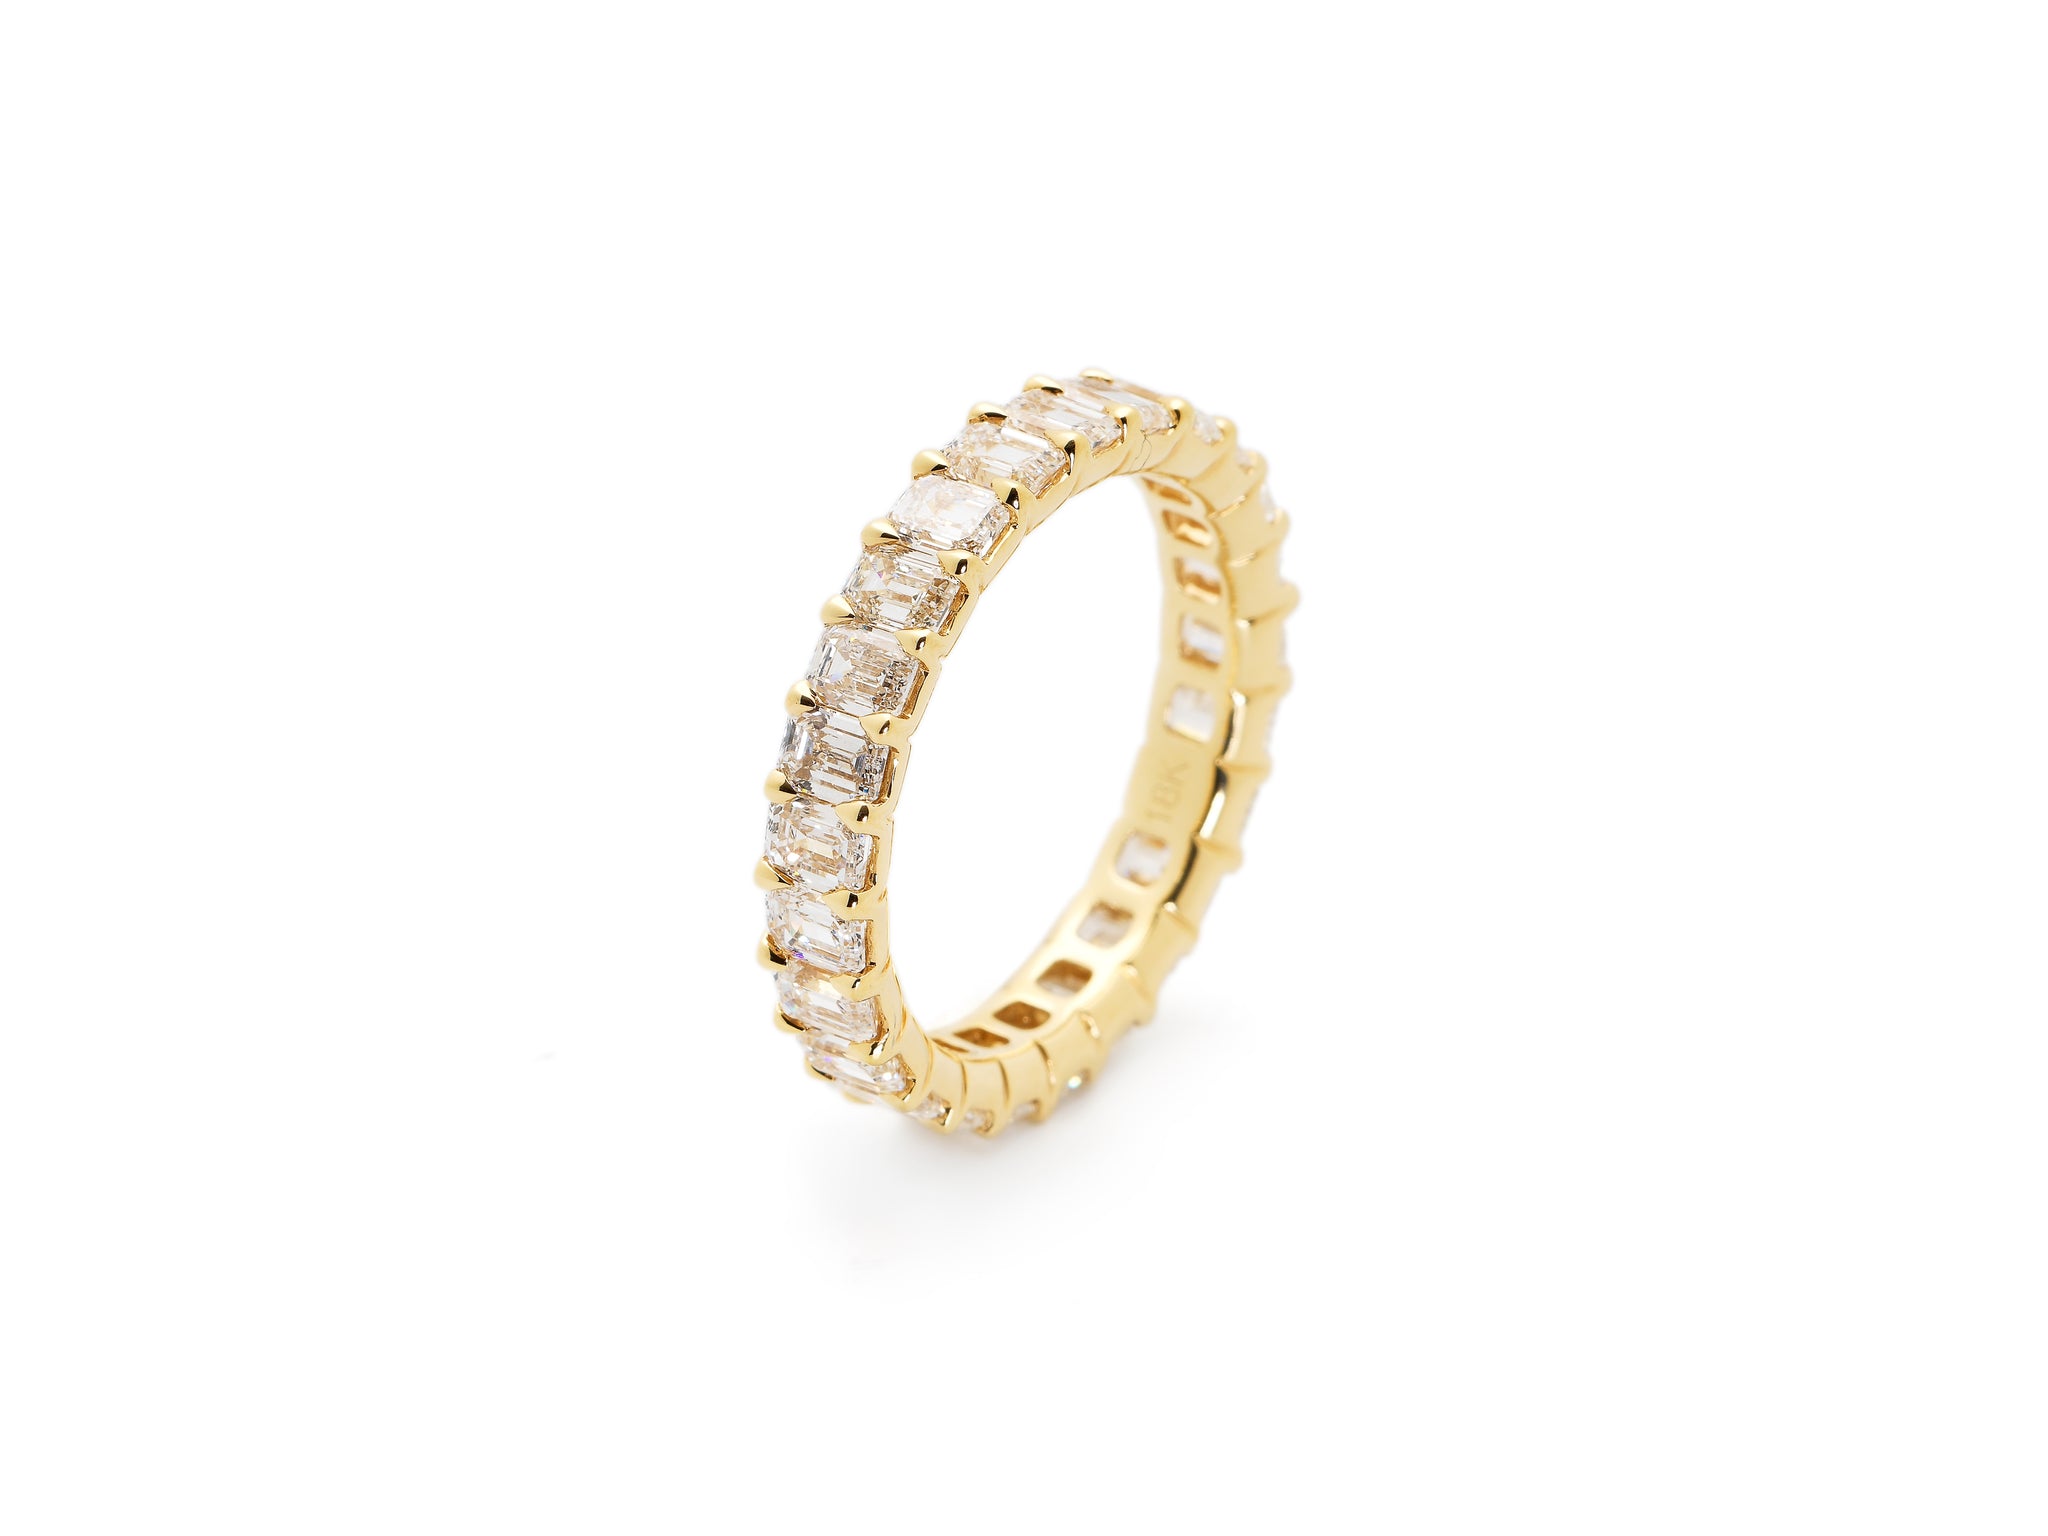 18 krt yellow gold alliance ring set with 25 emerald diamonds